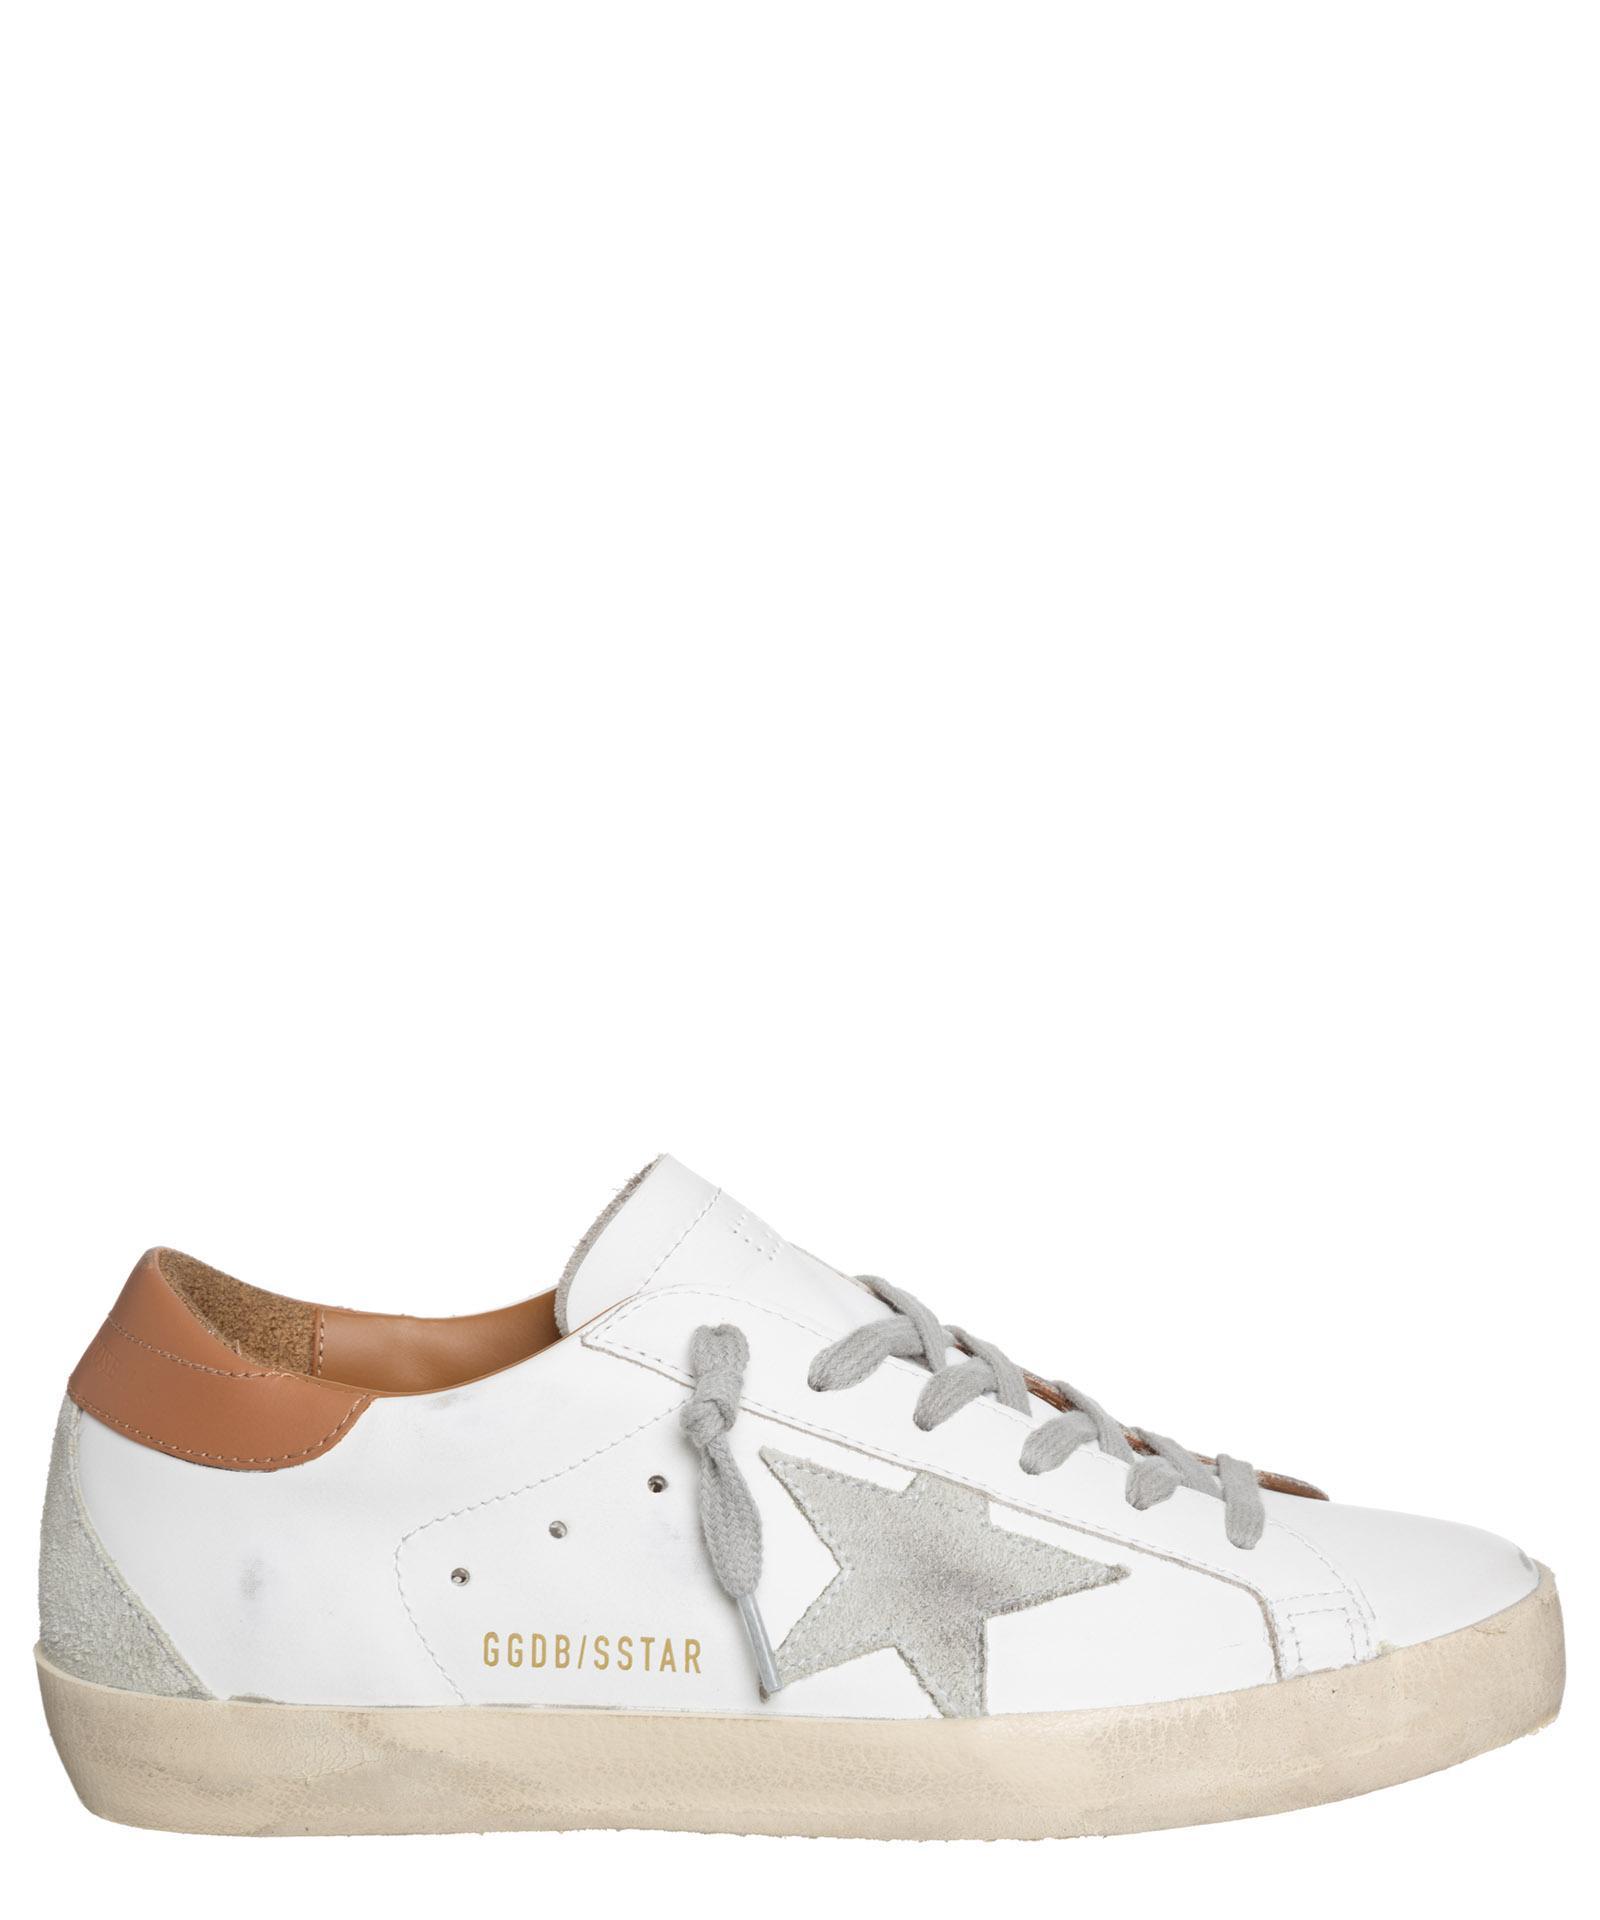 Golden Goose Superstar Sneaker in White Product Image